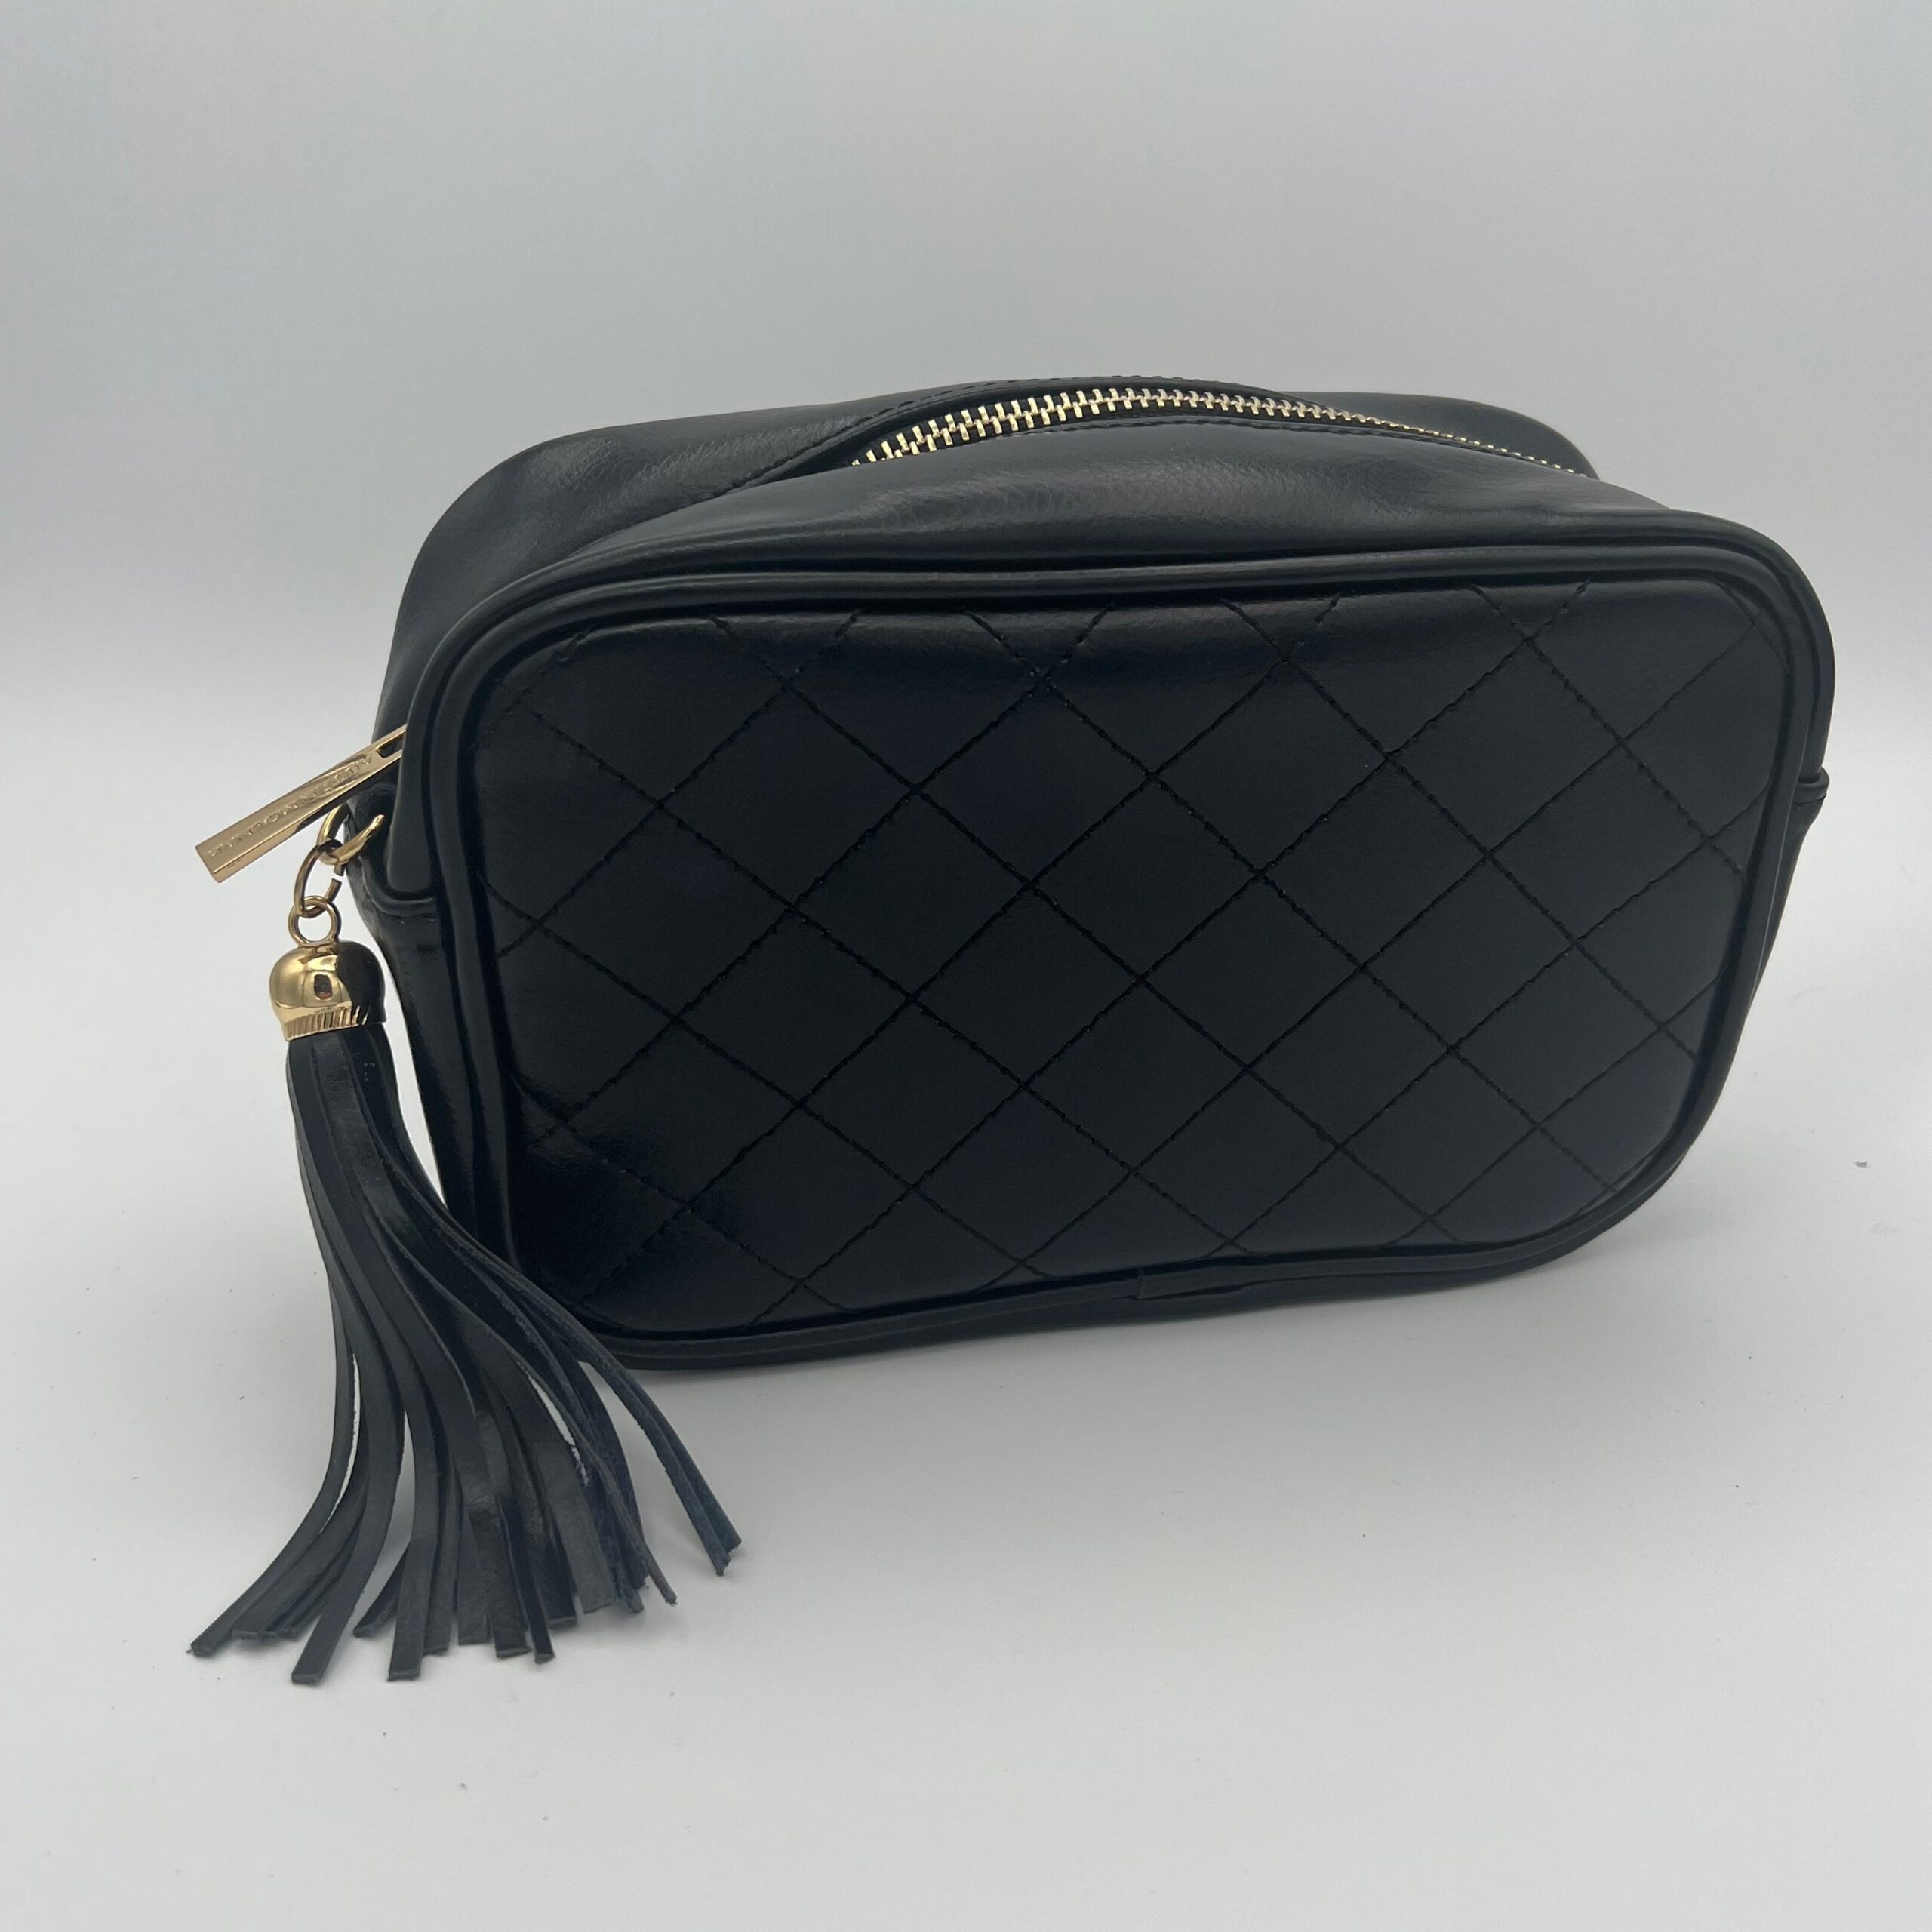 Austin Molnar Leather “The Little Black Bag”